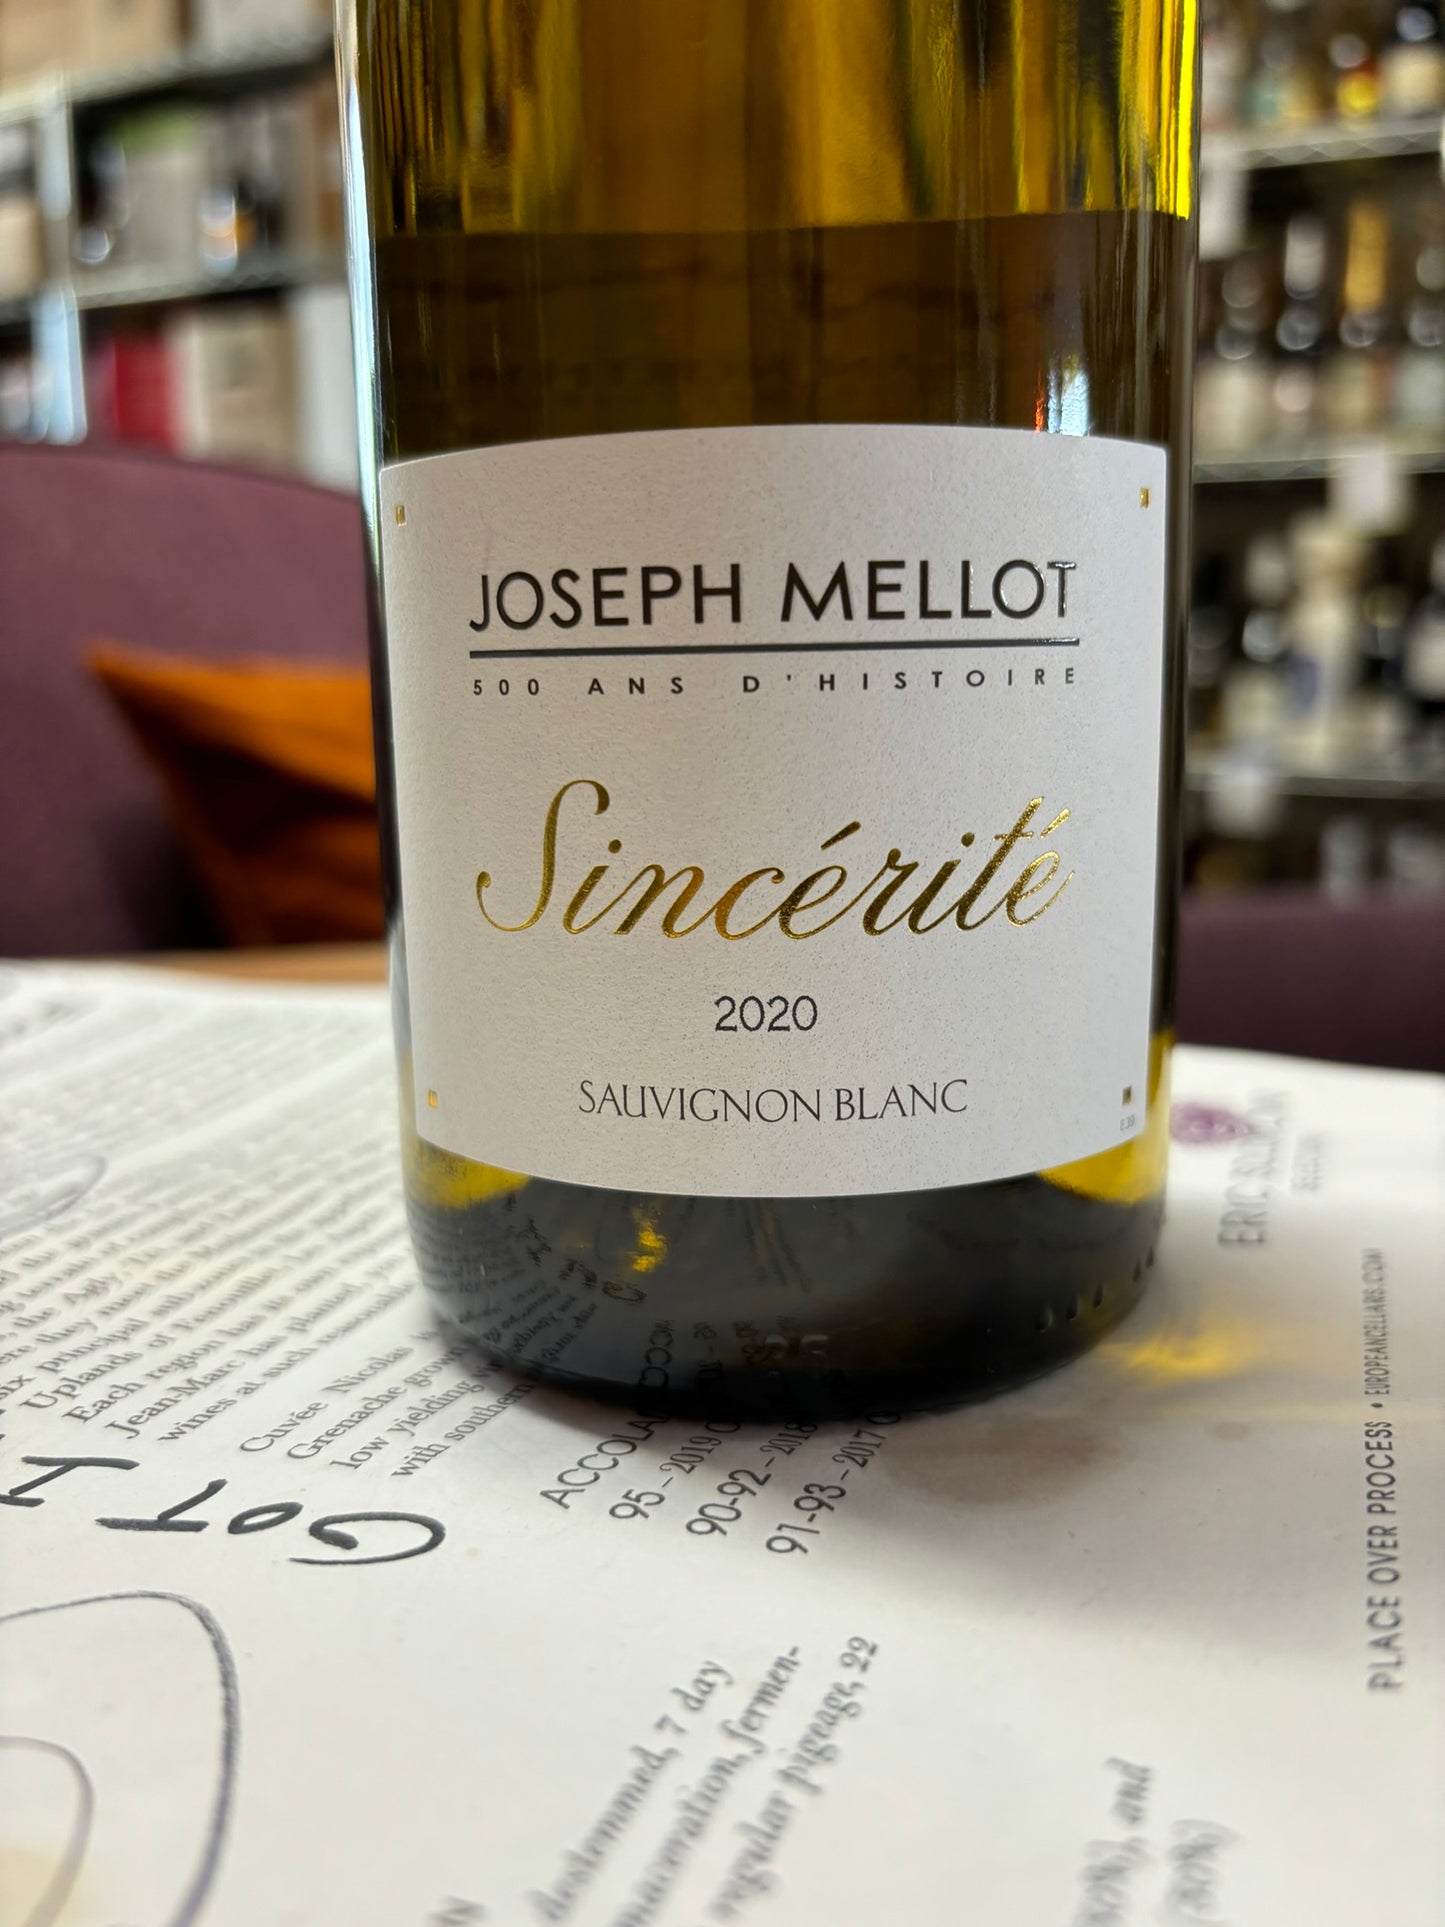 JOSEPH MELLOT 2020 Sauvignon Blanc 'Sincerite' (Loire, France)